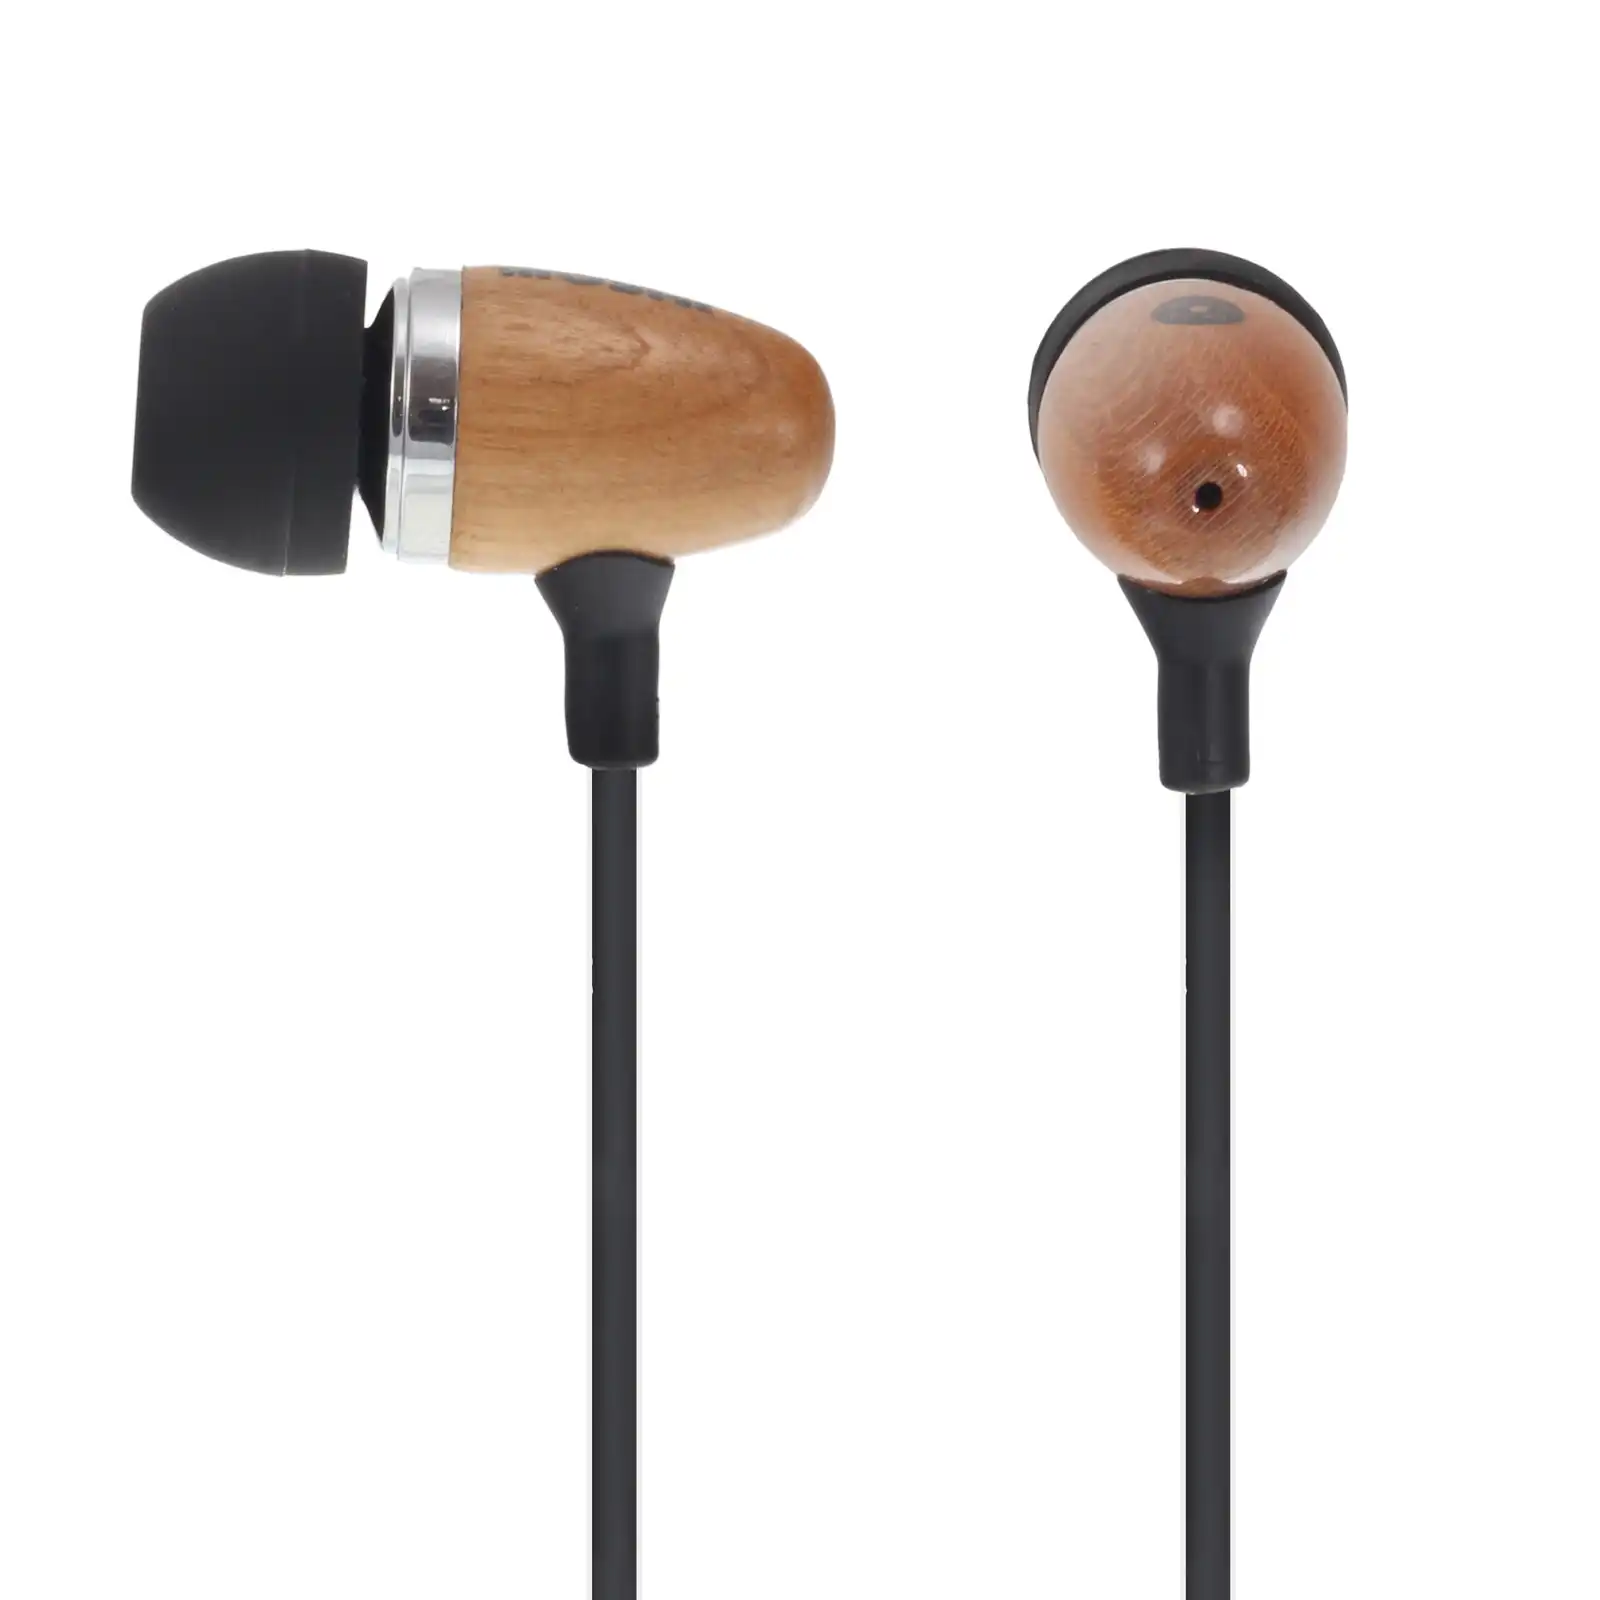 Moki Headphones Noise Isolation Buds Retro 3.5mm Earphones for iPhone/Android